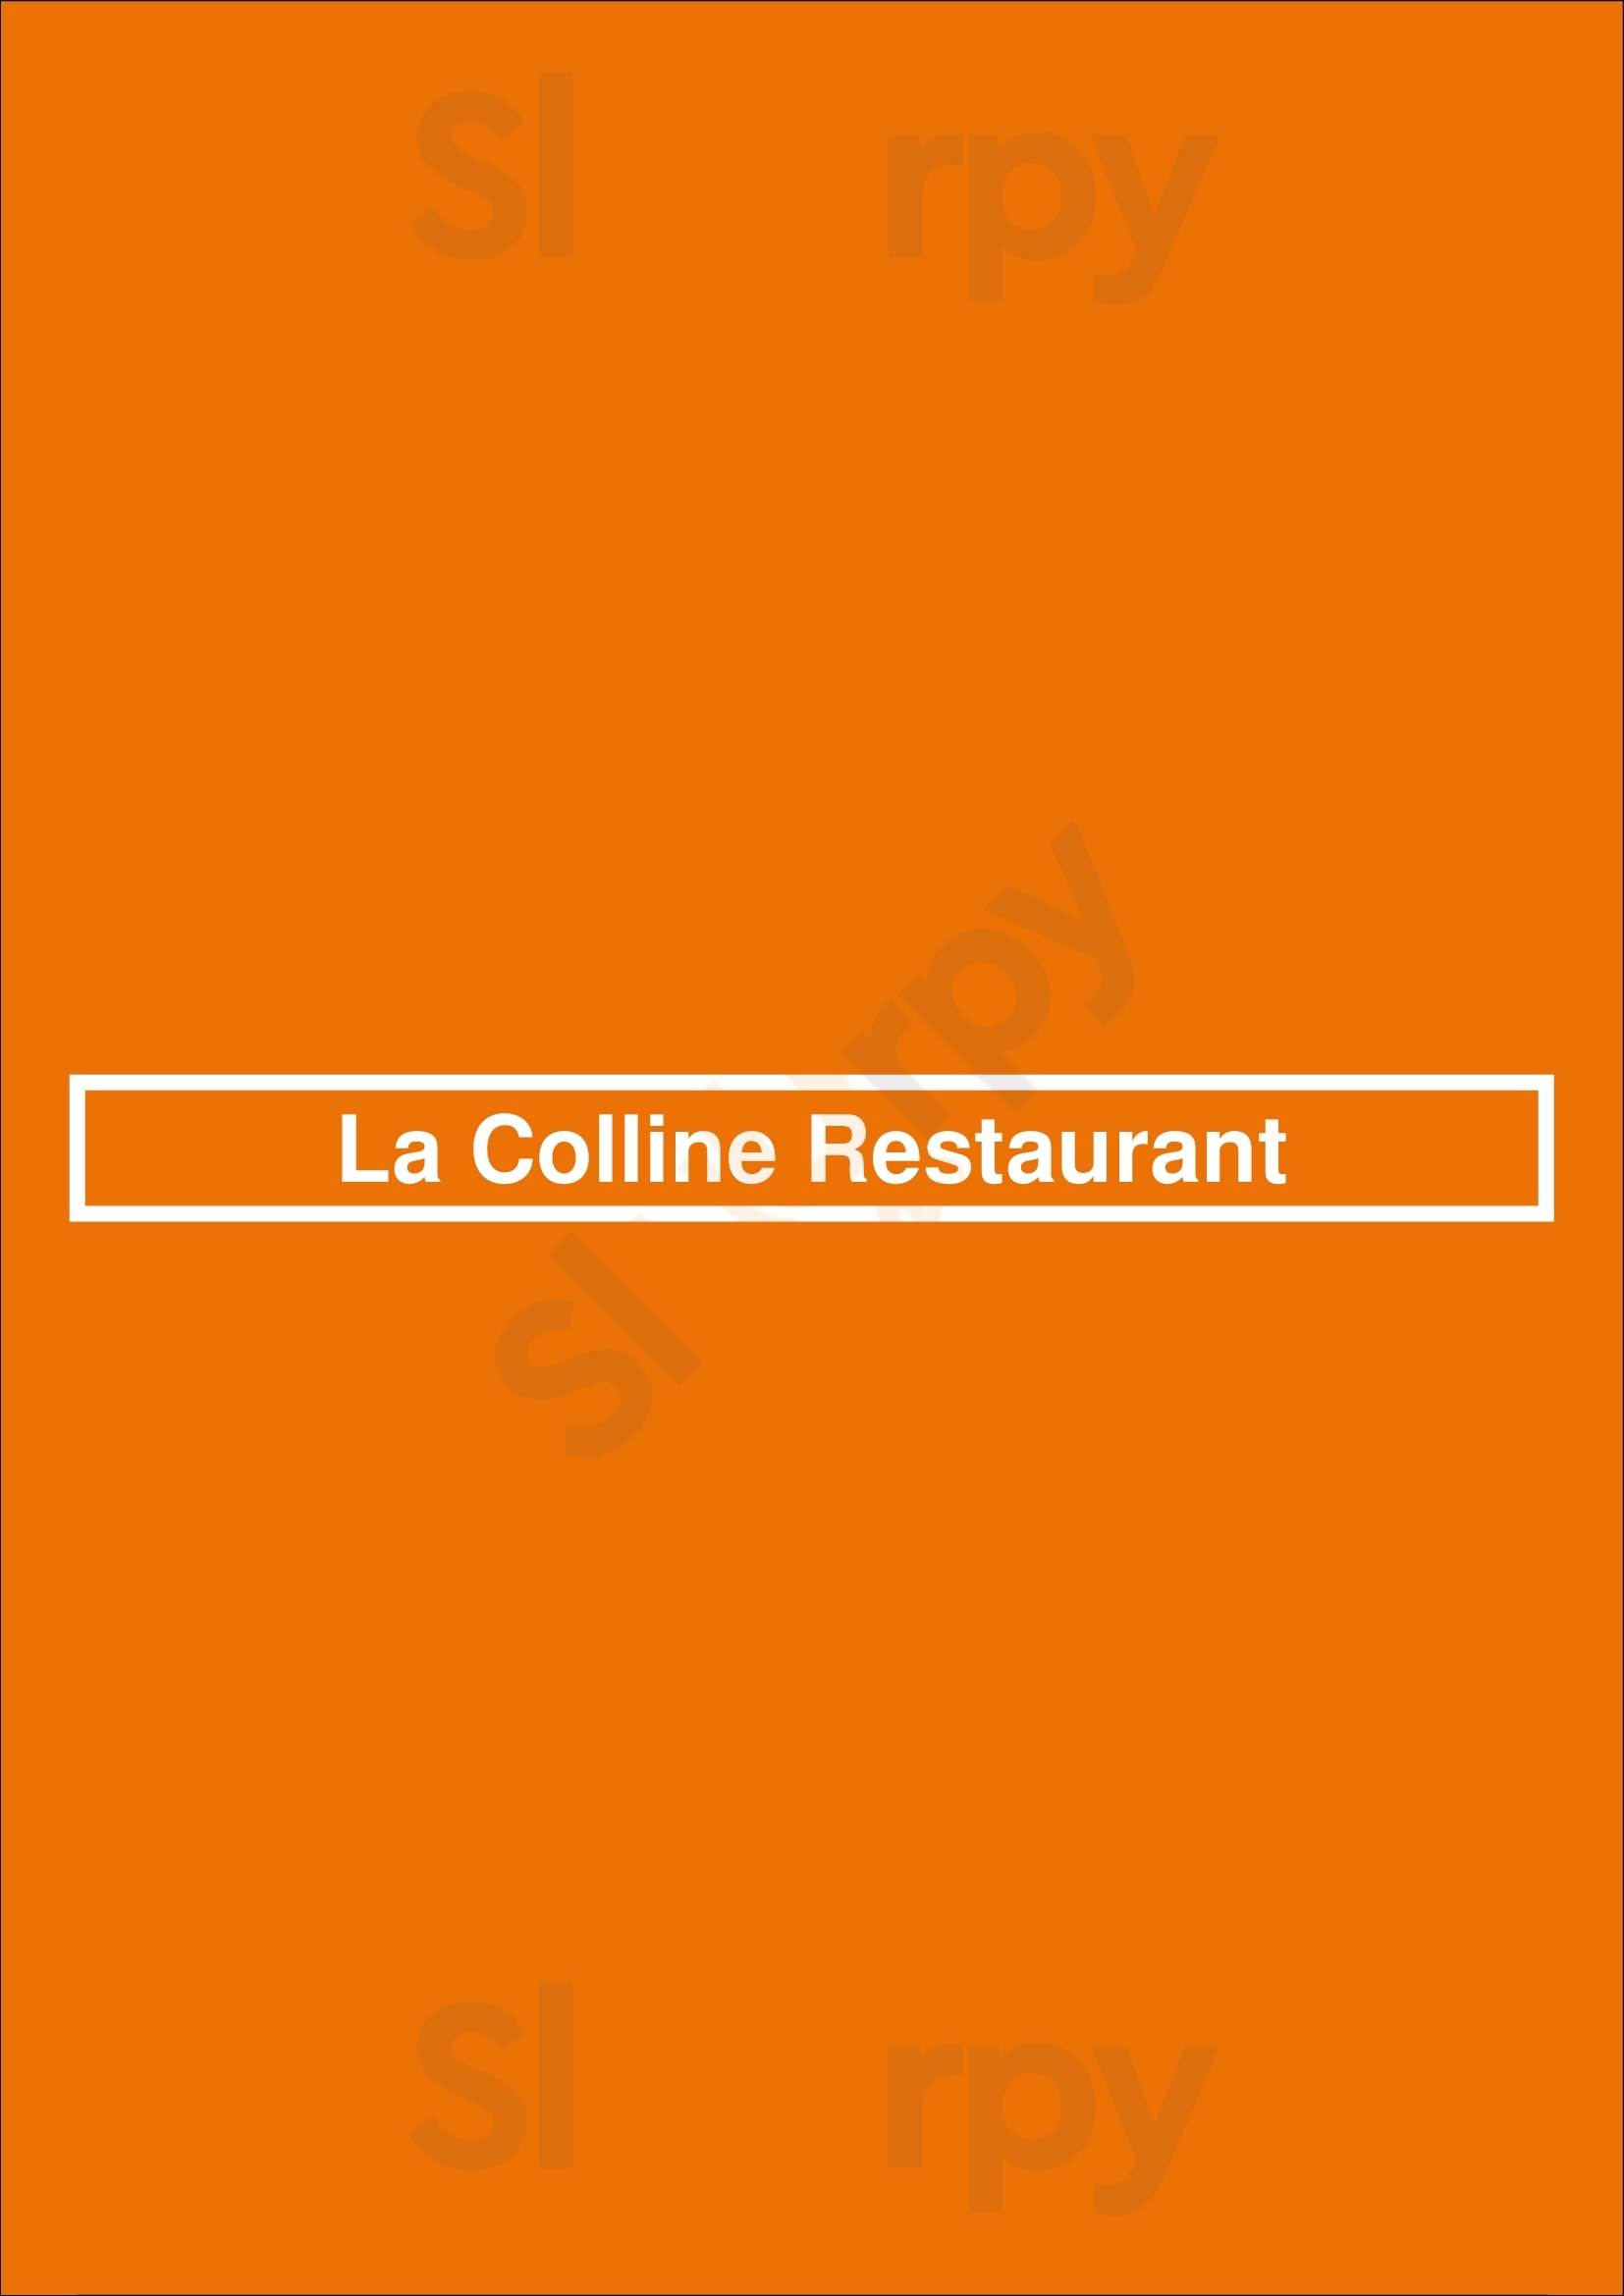 La Colline Restaurant Φηρά Menu - 1